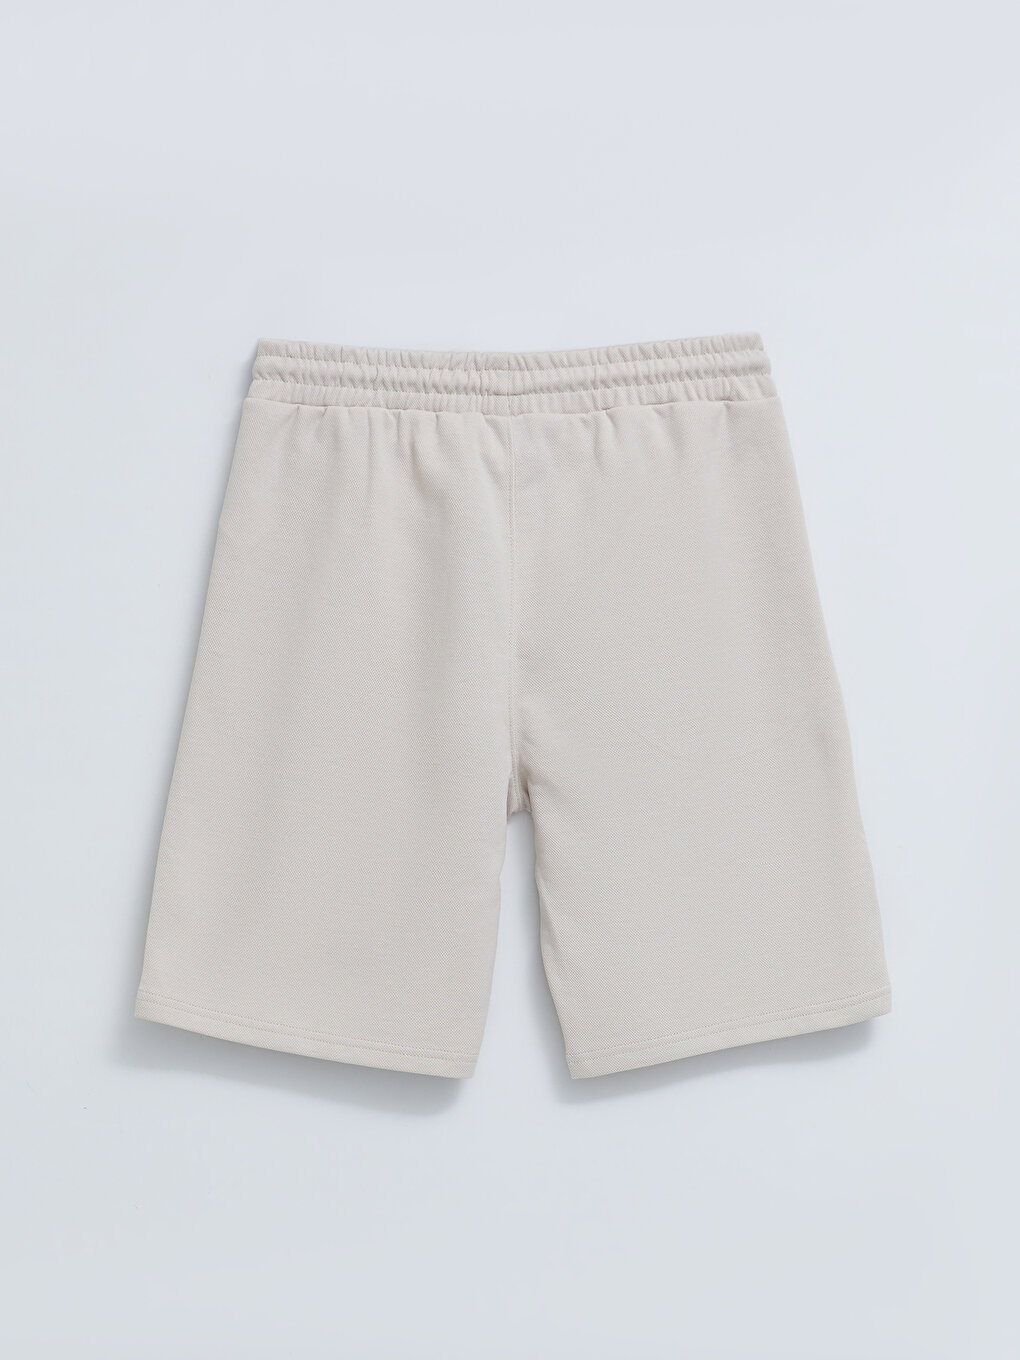 Standard Pattern Knitted Men's Shorts -S27897Z8-S1Y - S27897Z8-S1Y - LC ...